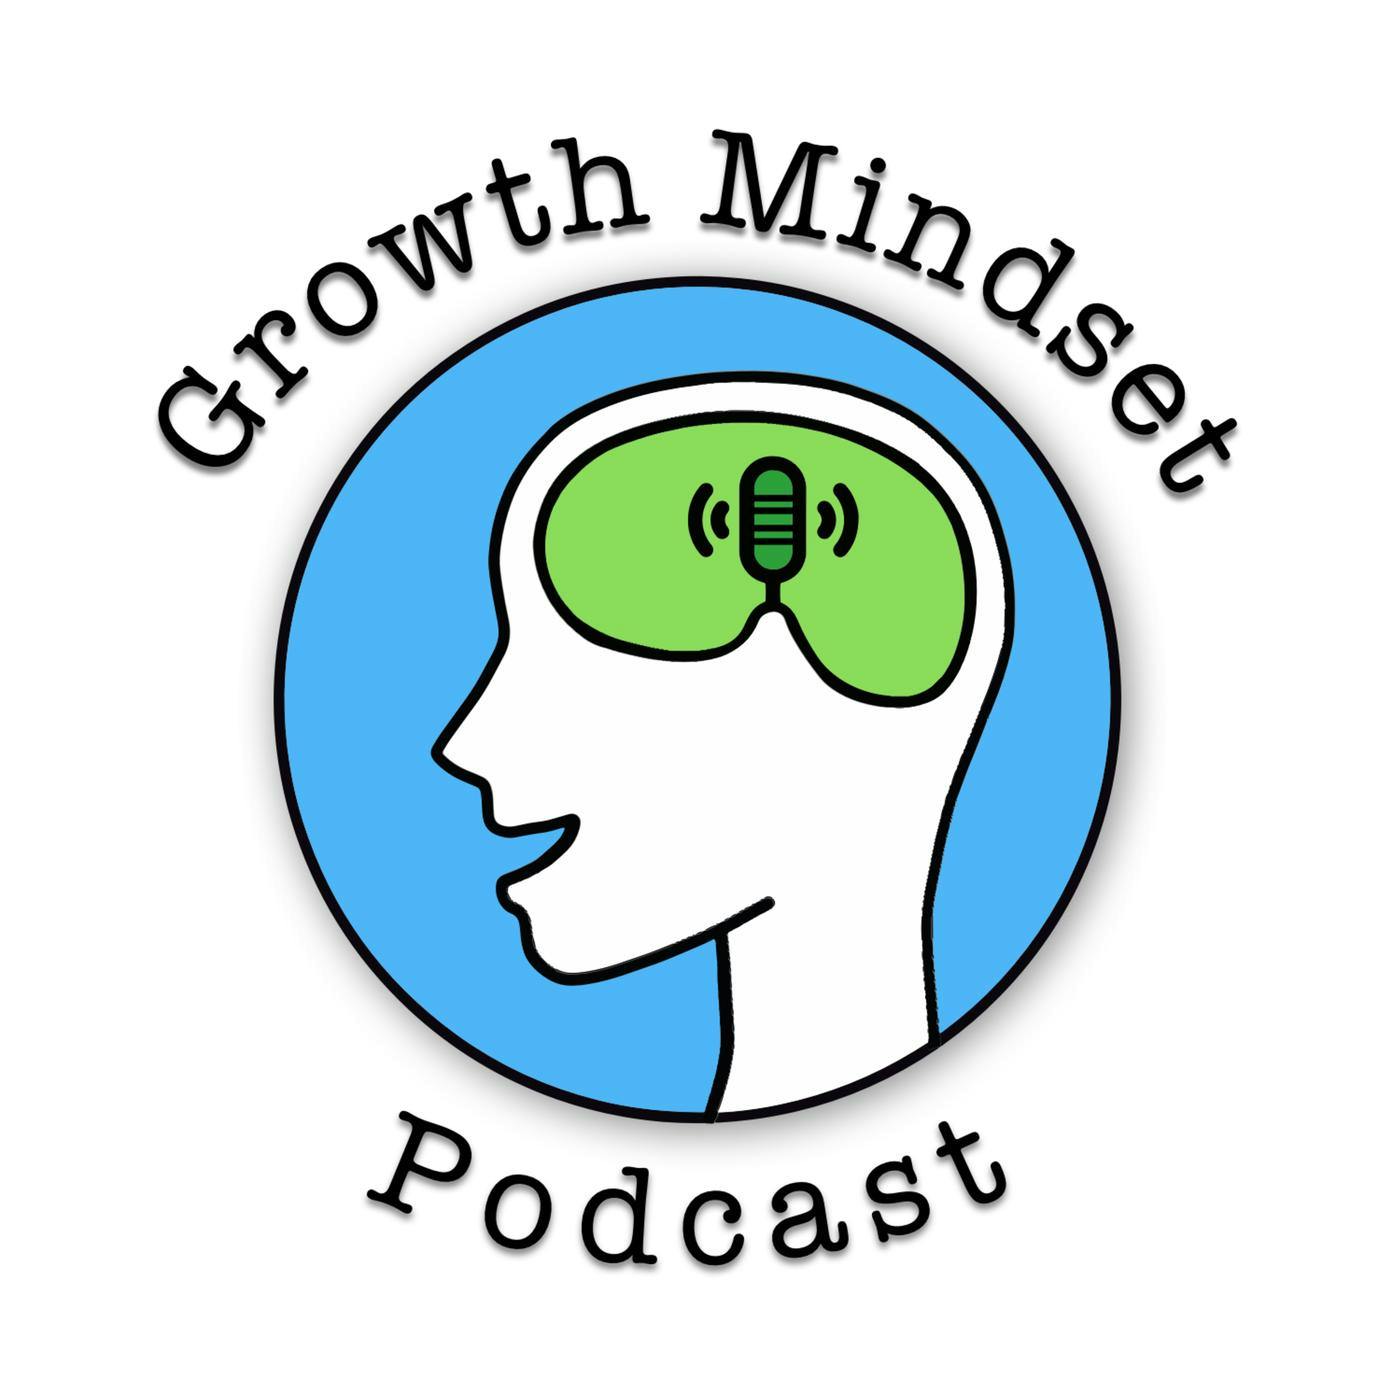 Growth Mindset - An introduction